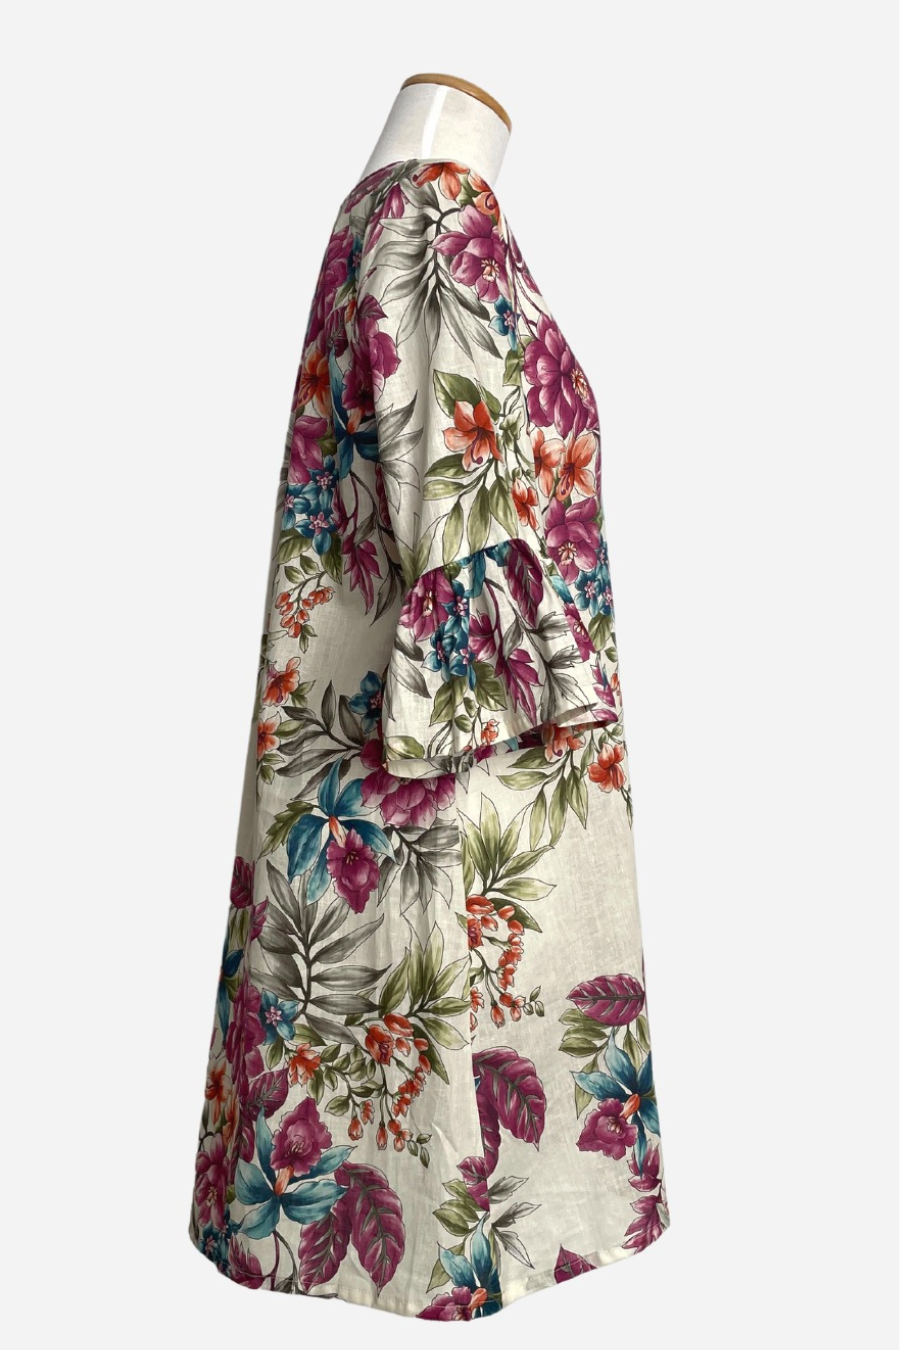 Phryne Dress/Tunic in Verbania Print Linen Blend Spring 2023